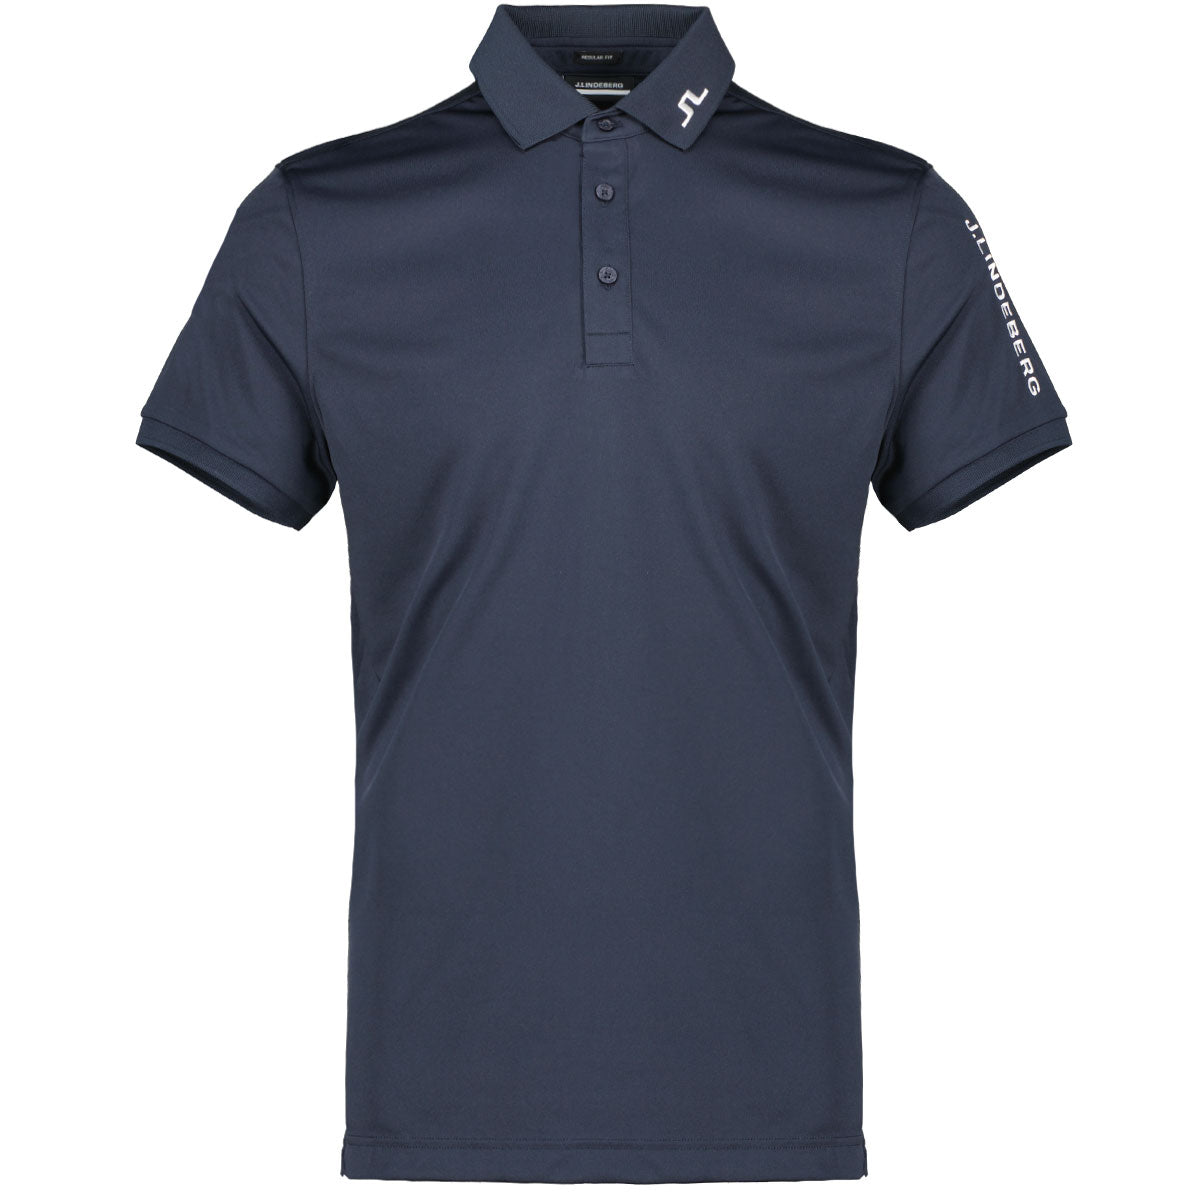 J. Lindeberg Tour Tech Golf Polo Shirt GMJT06337